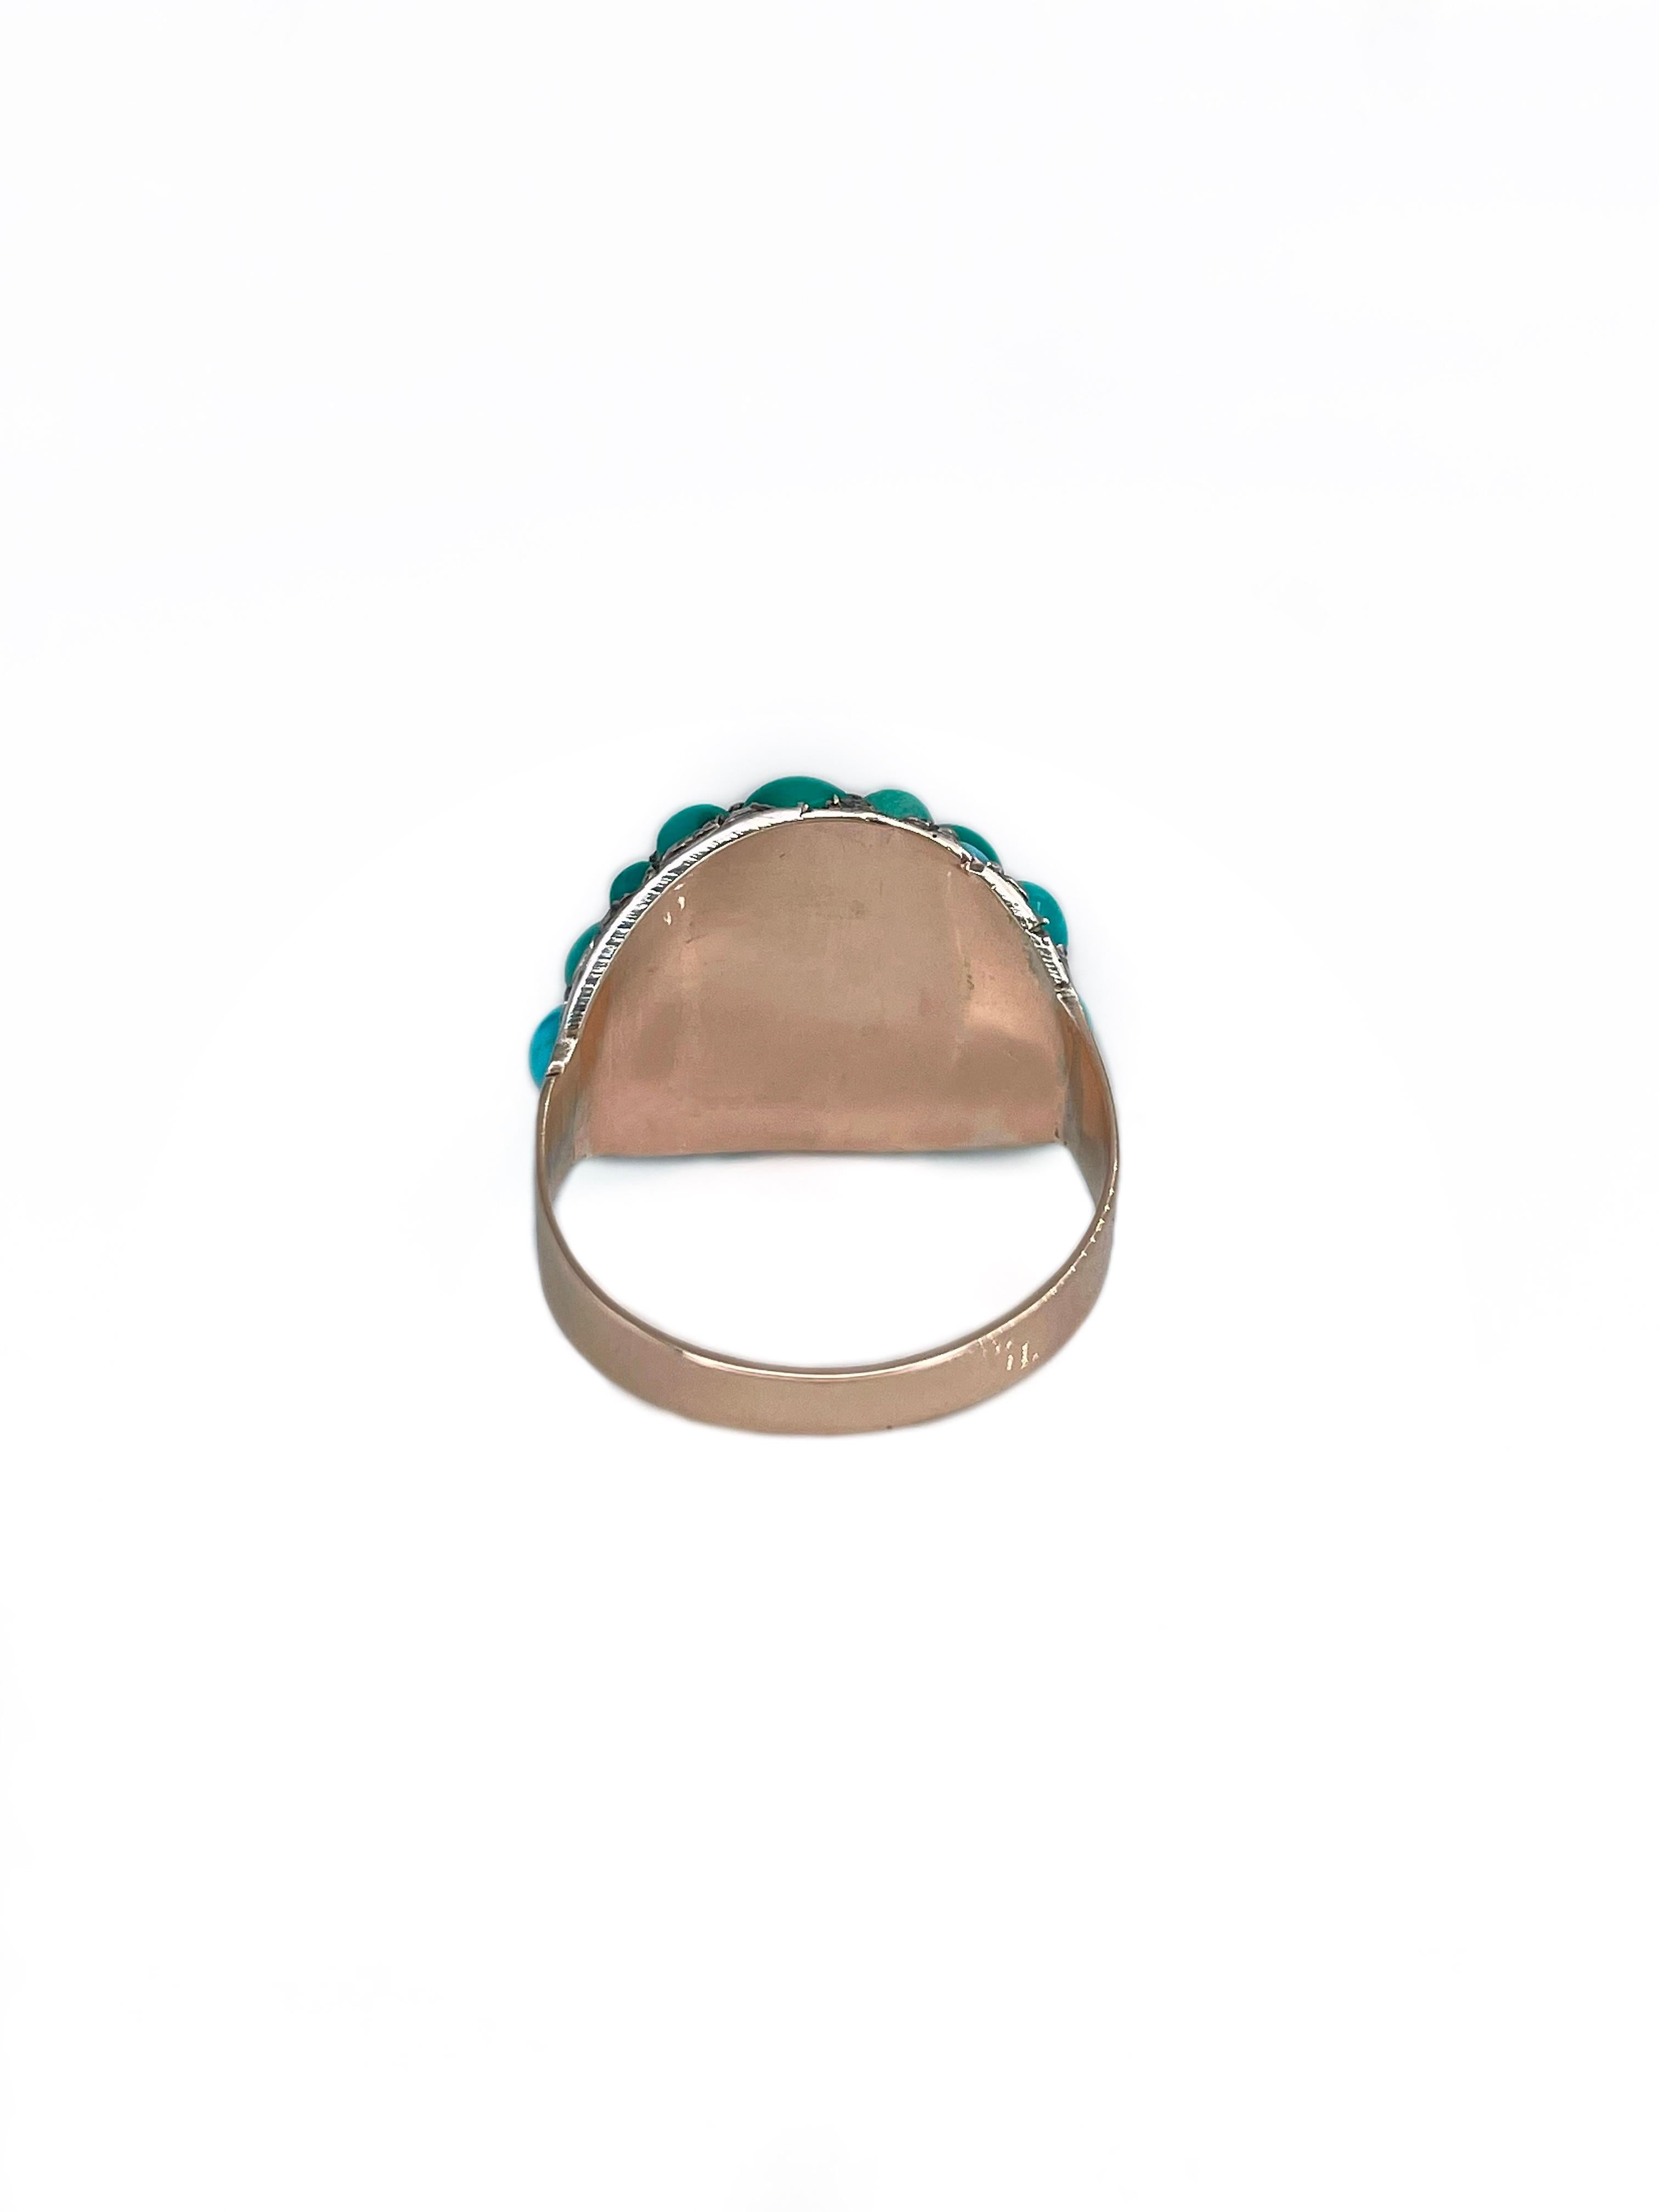 Women's Victorian 14 Karat Gold Pavé Set Turquoise Dome Ring